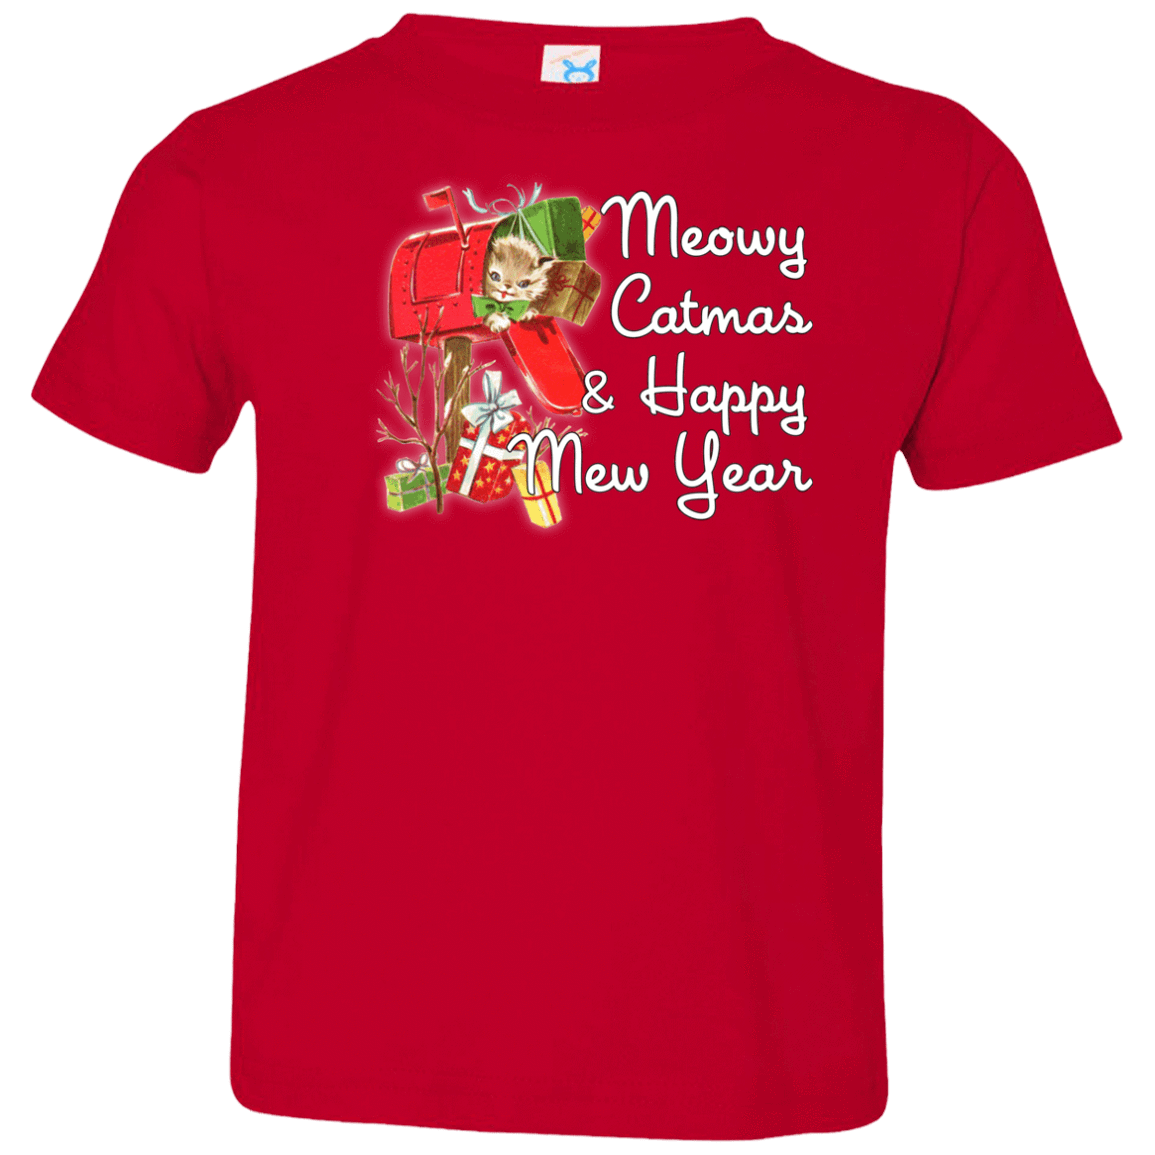 T-Shirts Red / 2T Meowy Catmas Toddler Premium T-Shirt